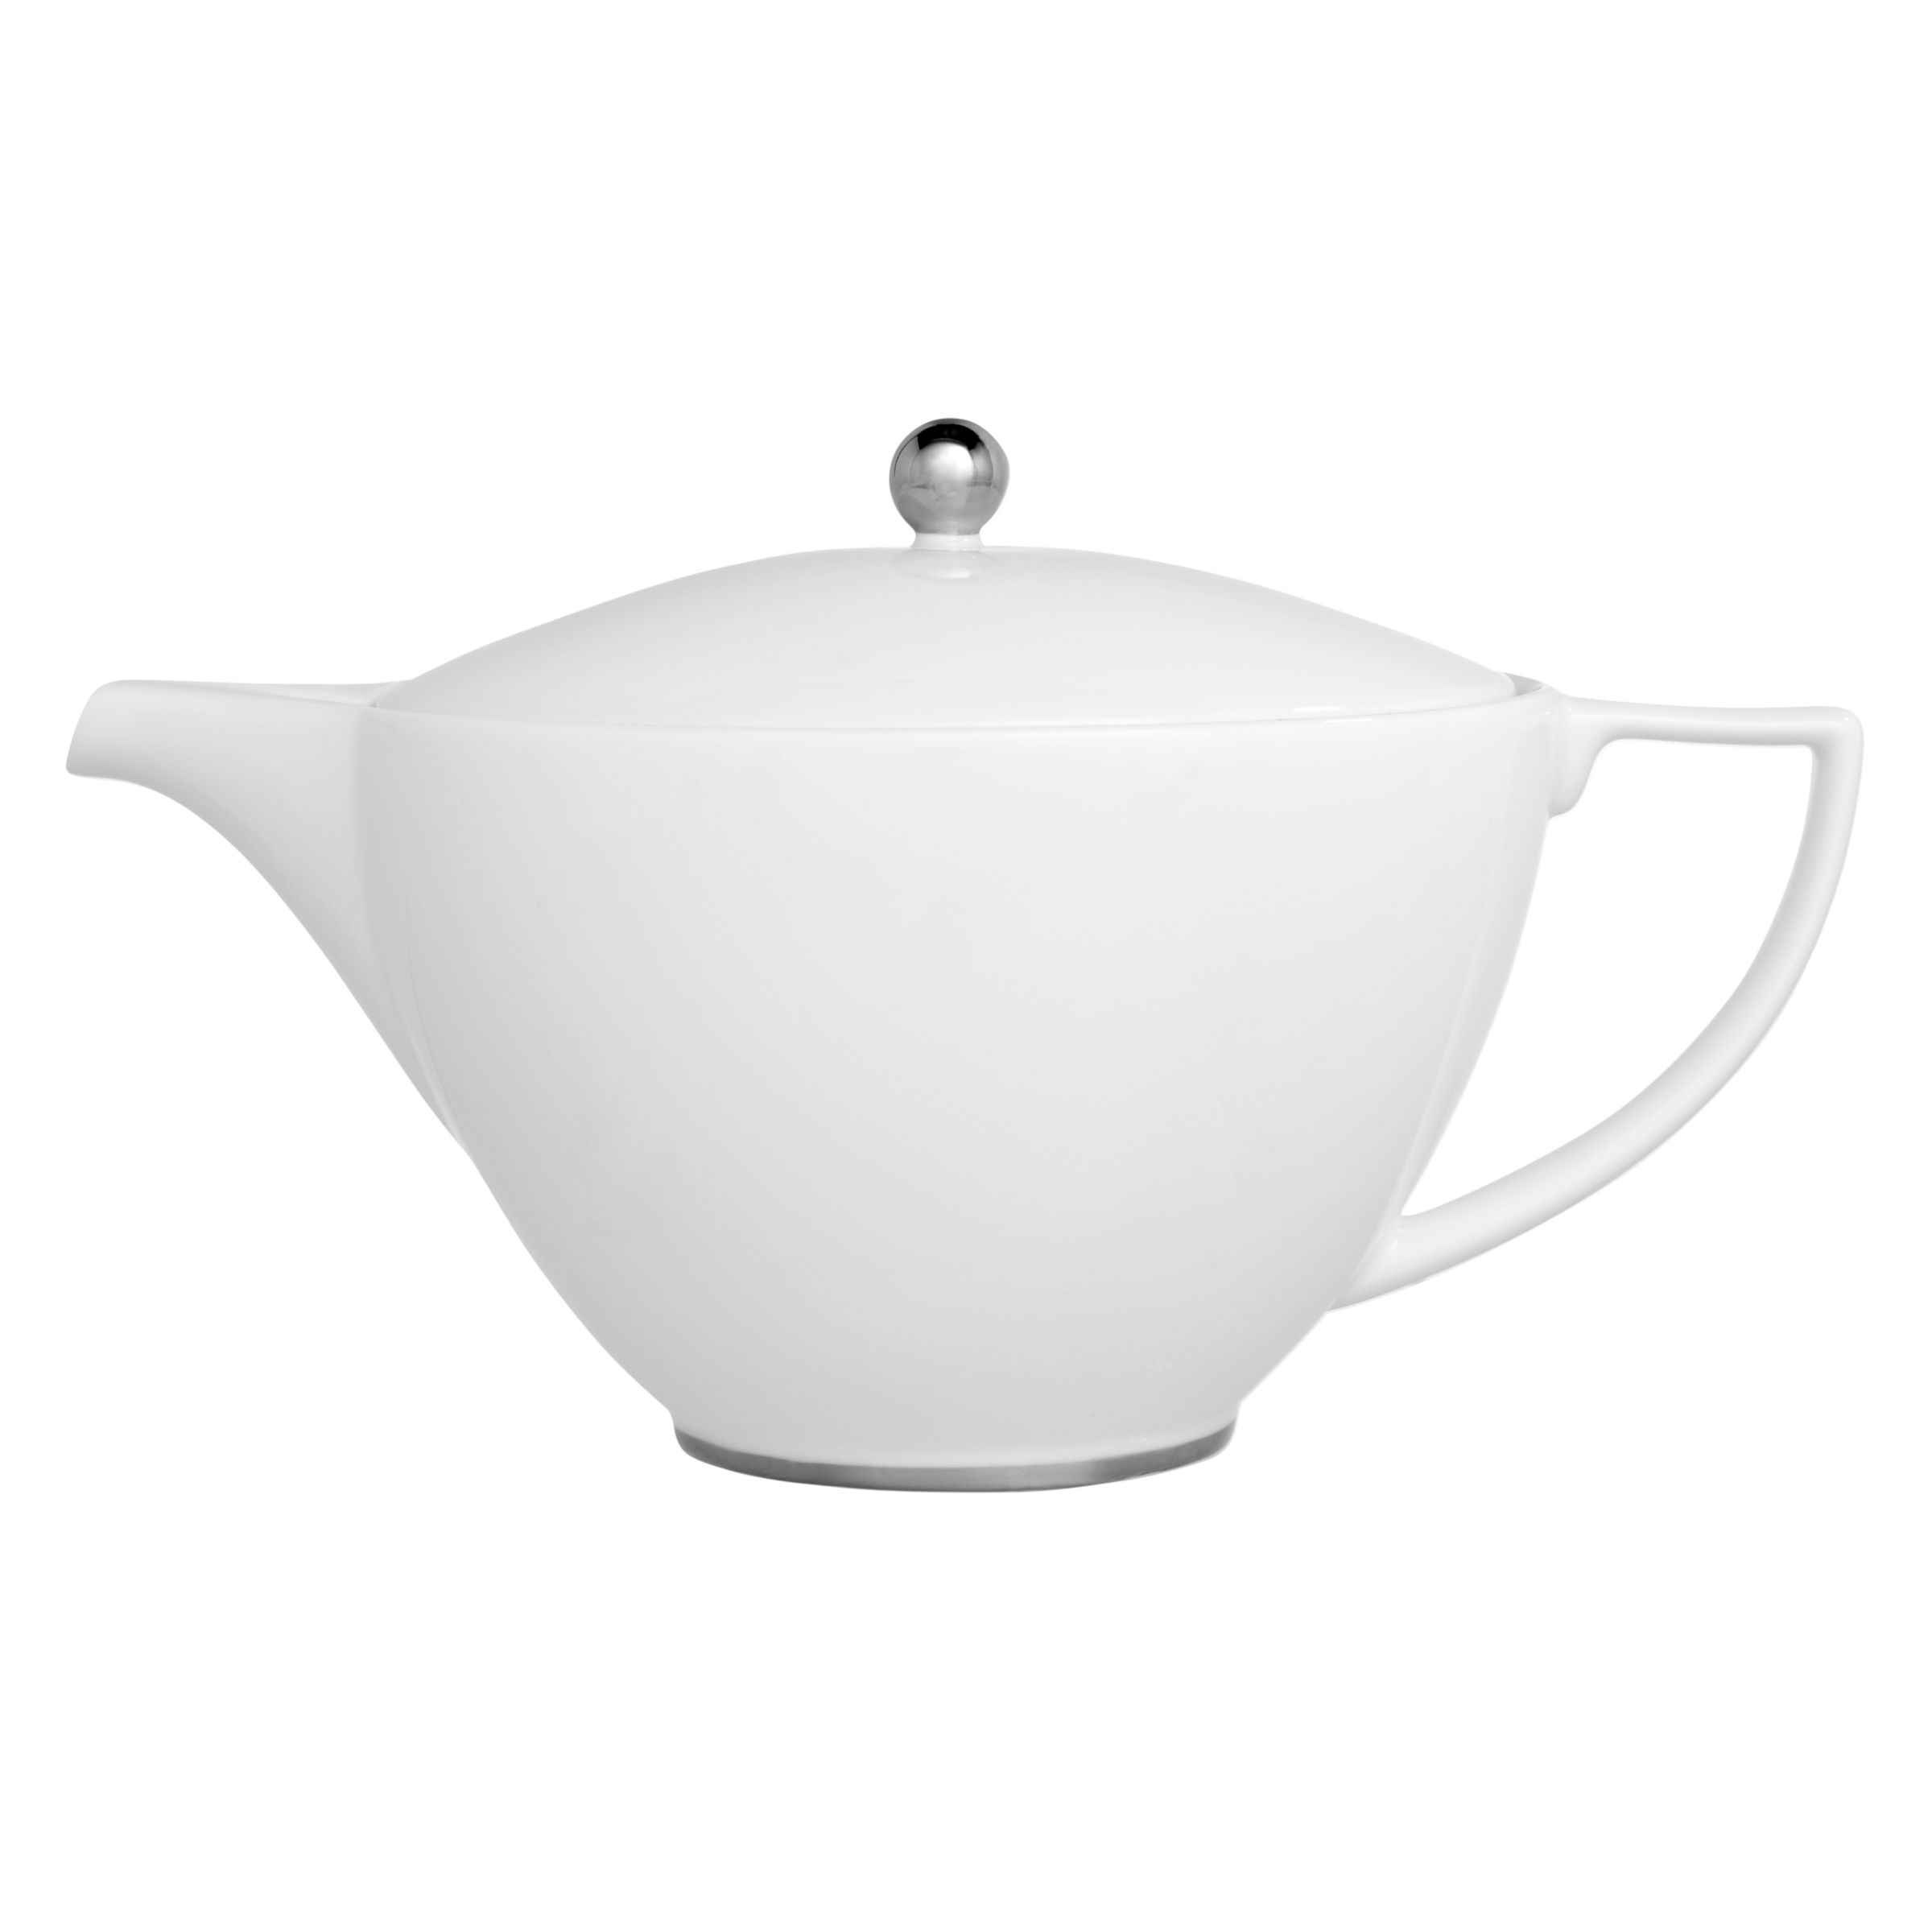 Jasper Conran for Wedgwood Platinum Teapot, 1.2L